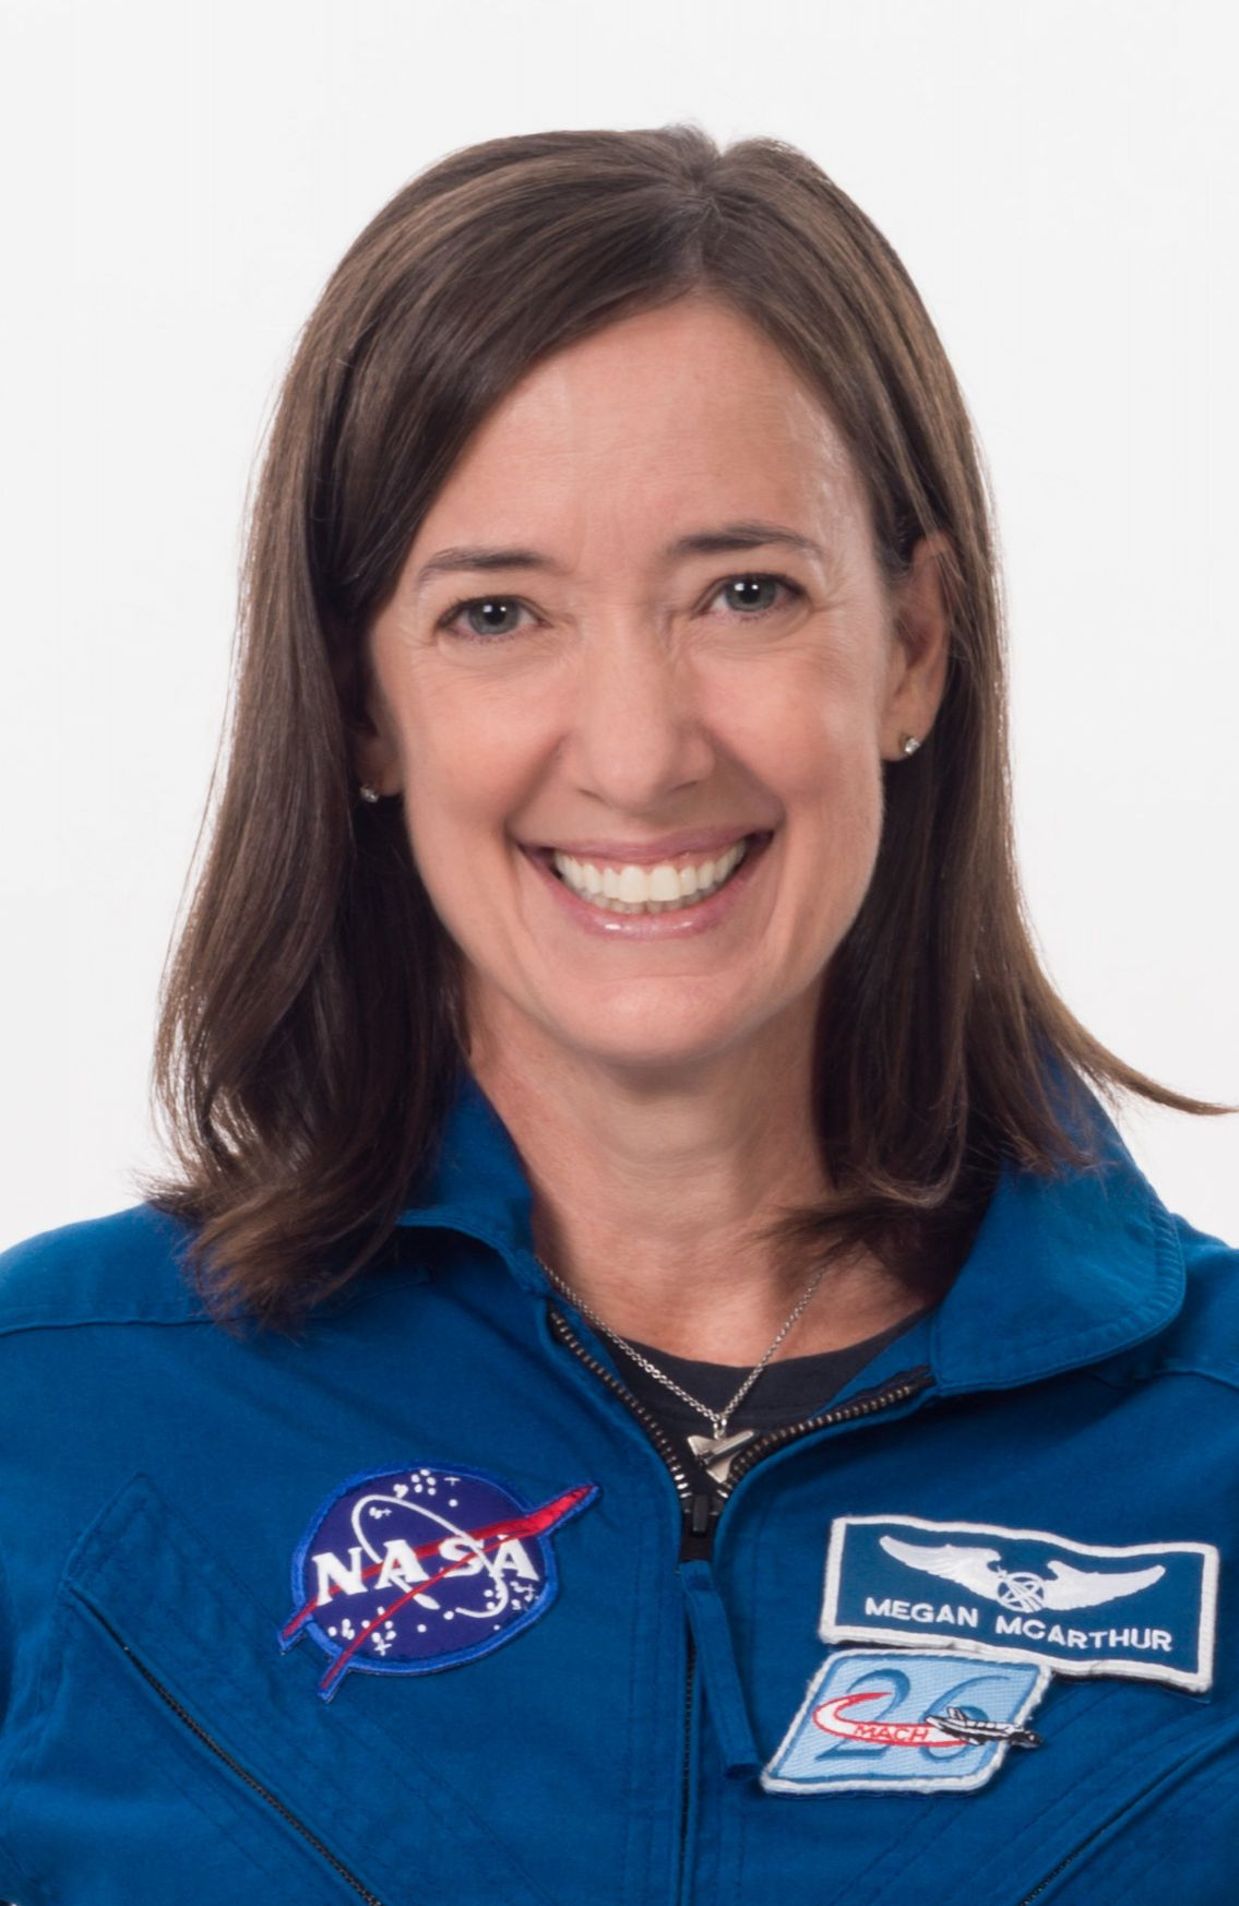 L'astronaute Megan McArthur Behnken, c'est elel qui pilotera le SpaceX crew-2 avec lequel Thomas Pesquet rejoindra l'ISS. 